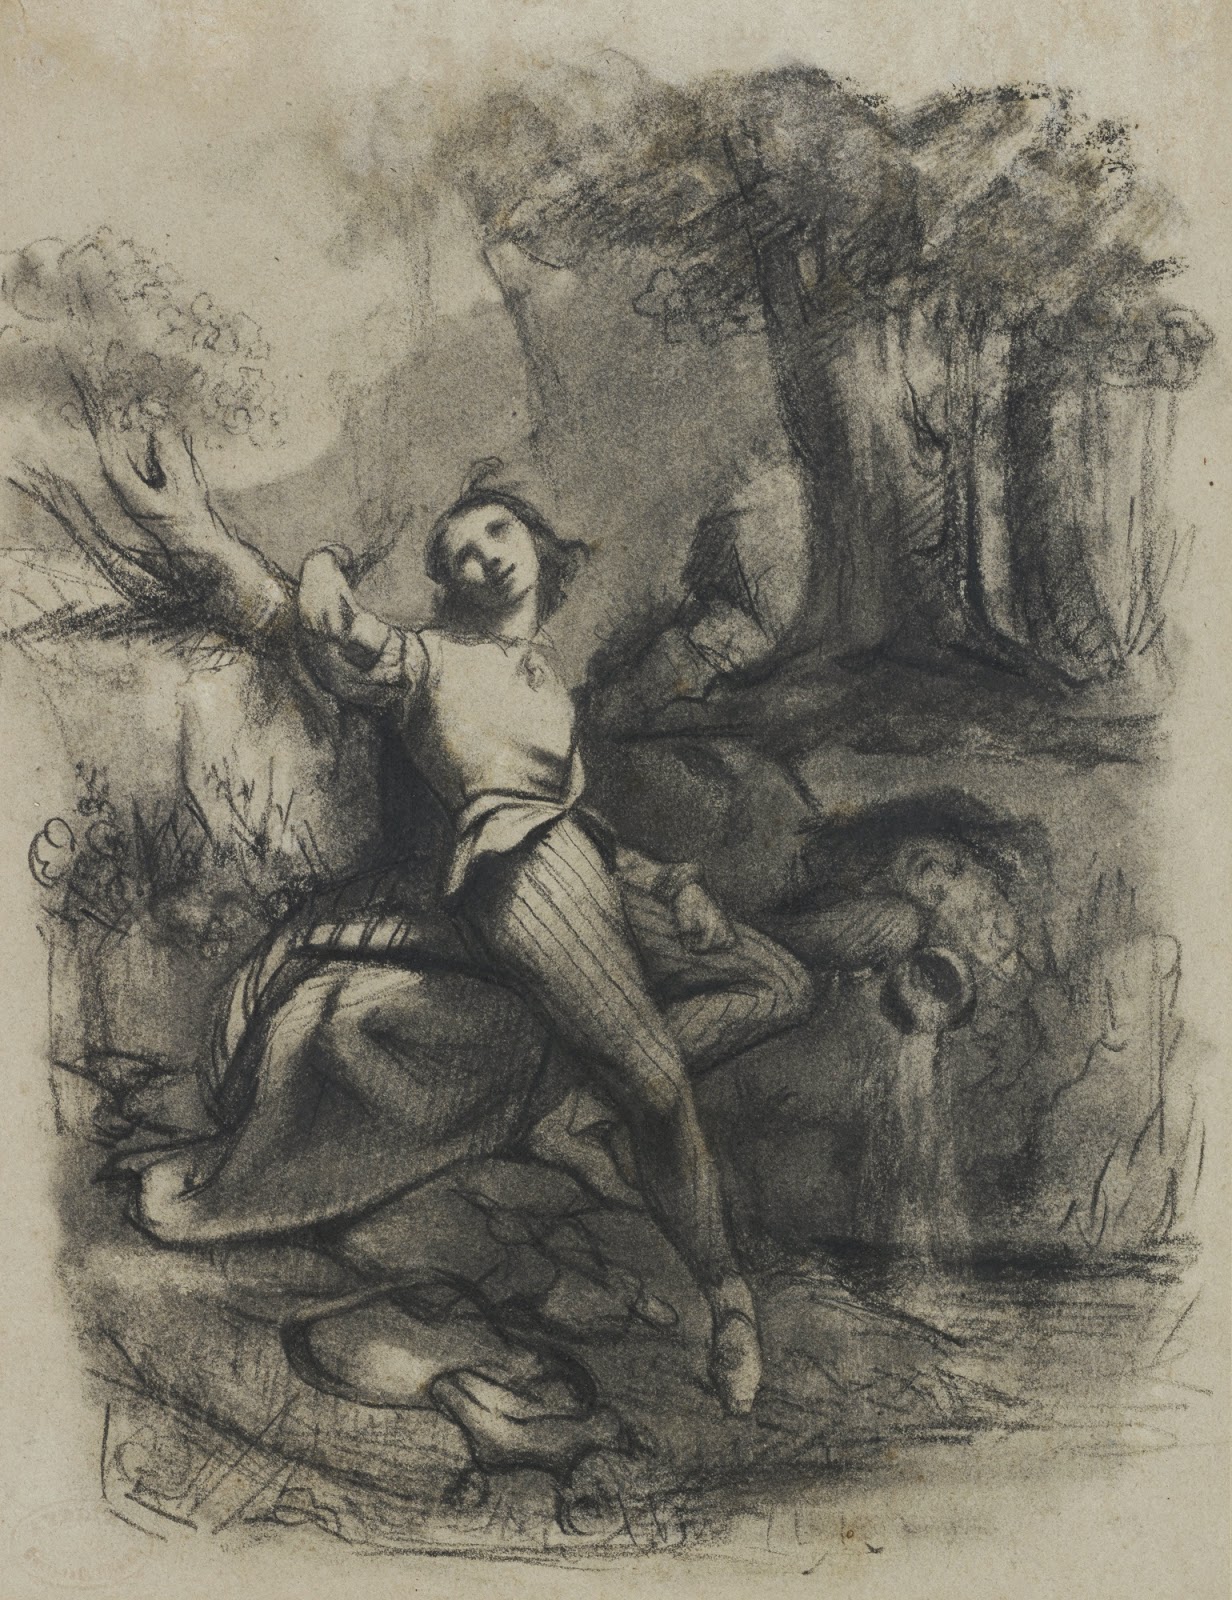 Gustave+Courbet-1819-1877 (30).jpg